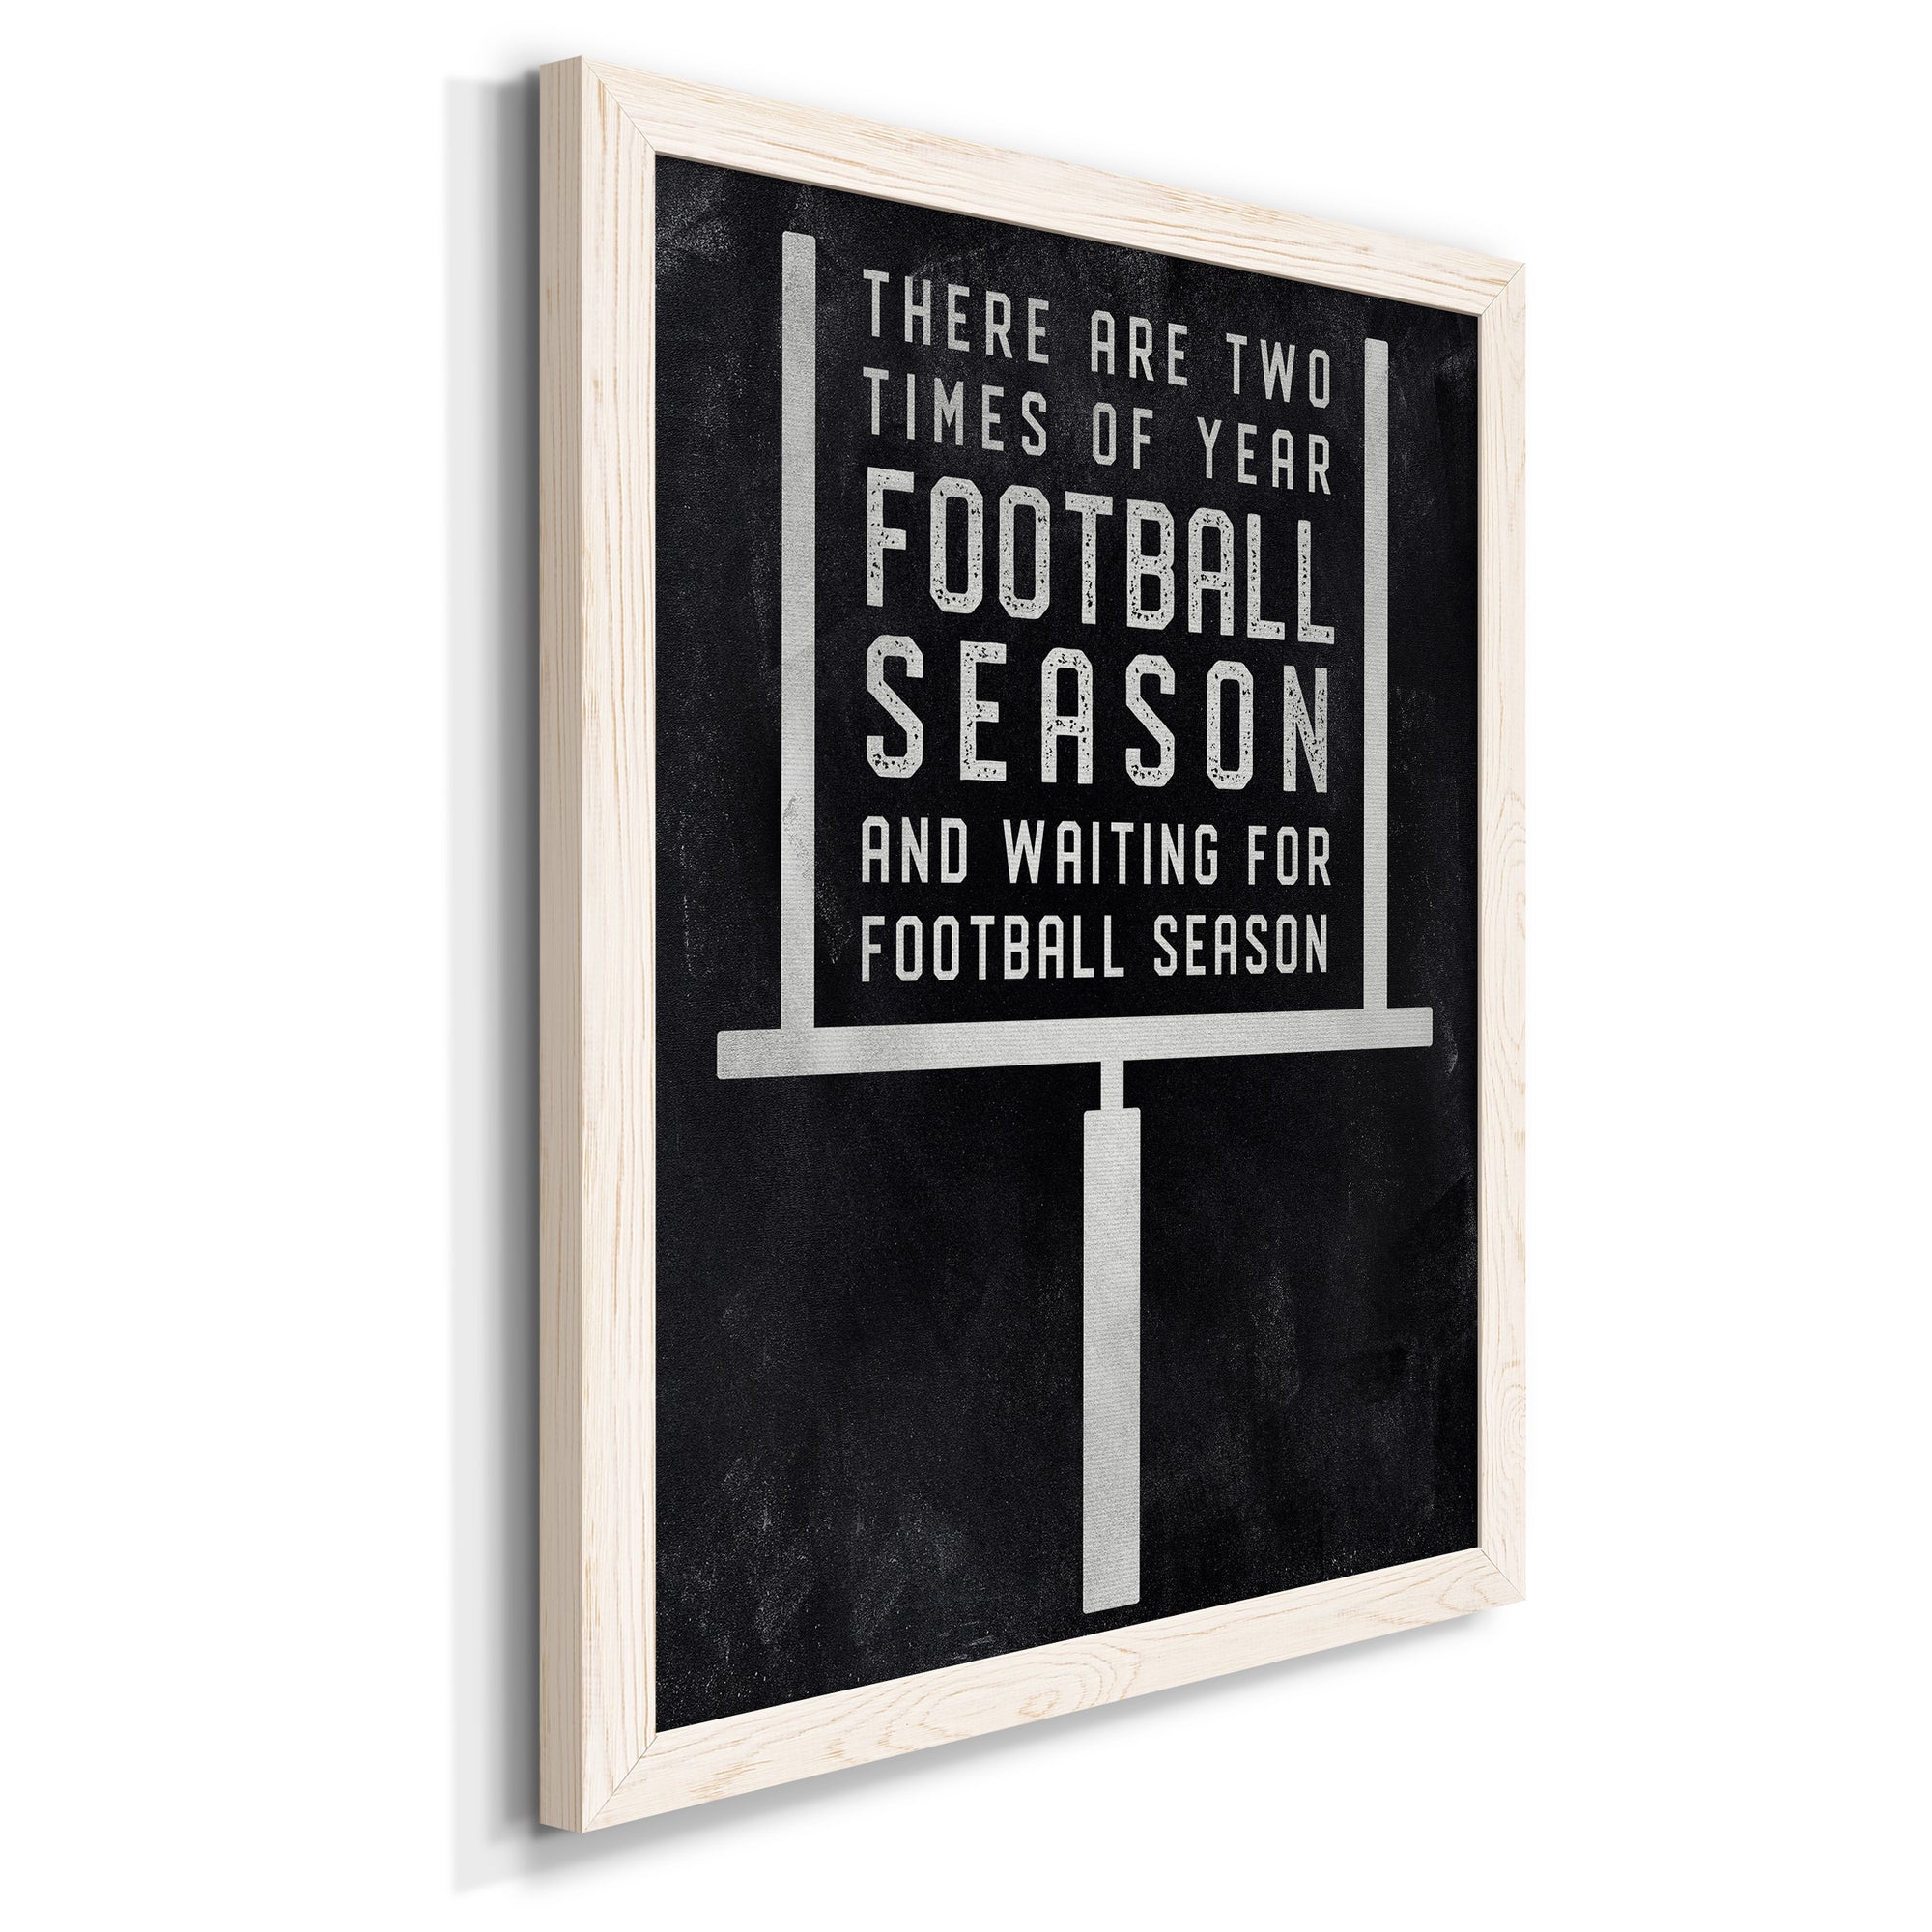 Football Season - Premium Canvas Framed in Barnwood - Ready to Hang